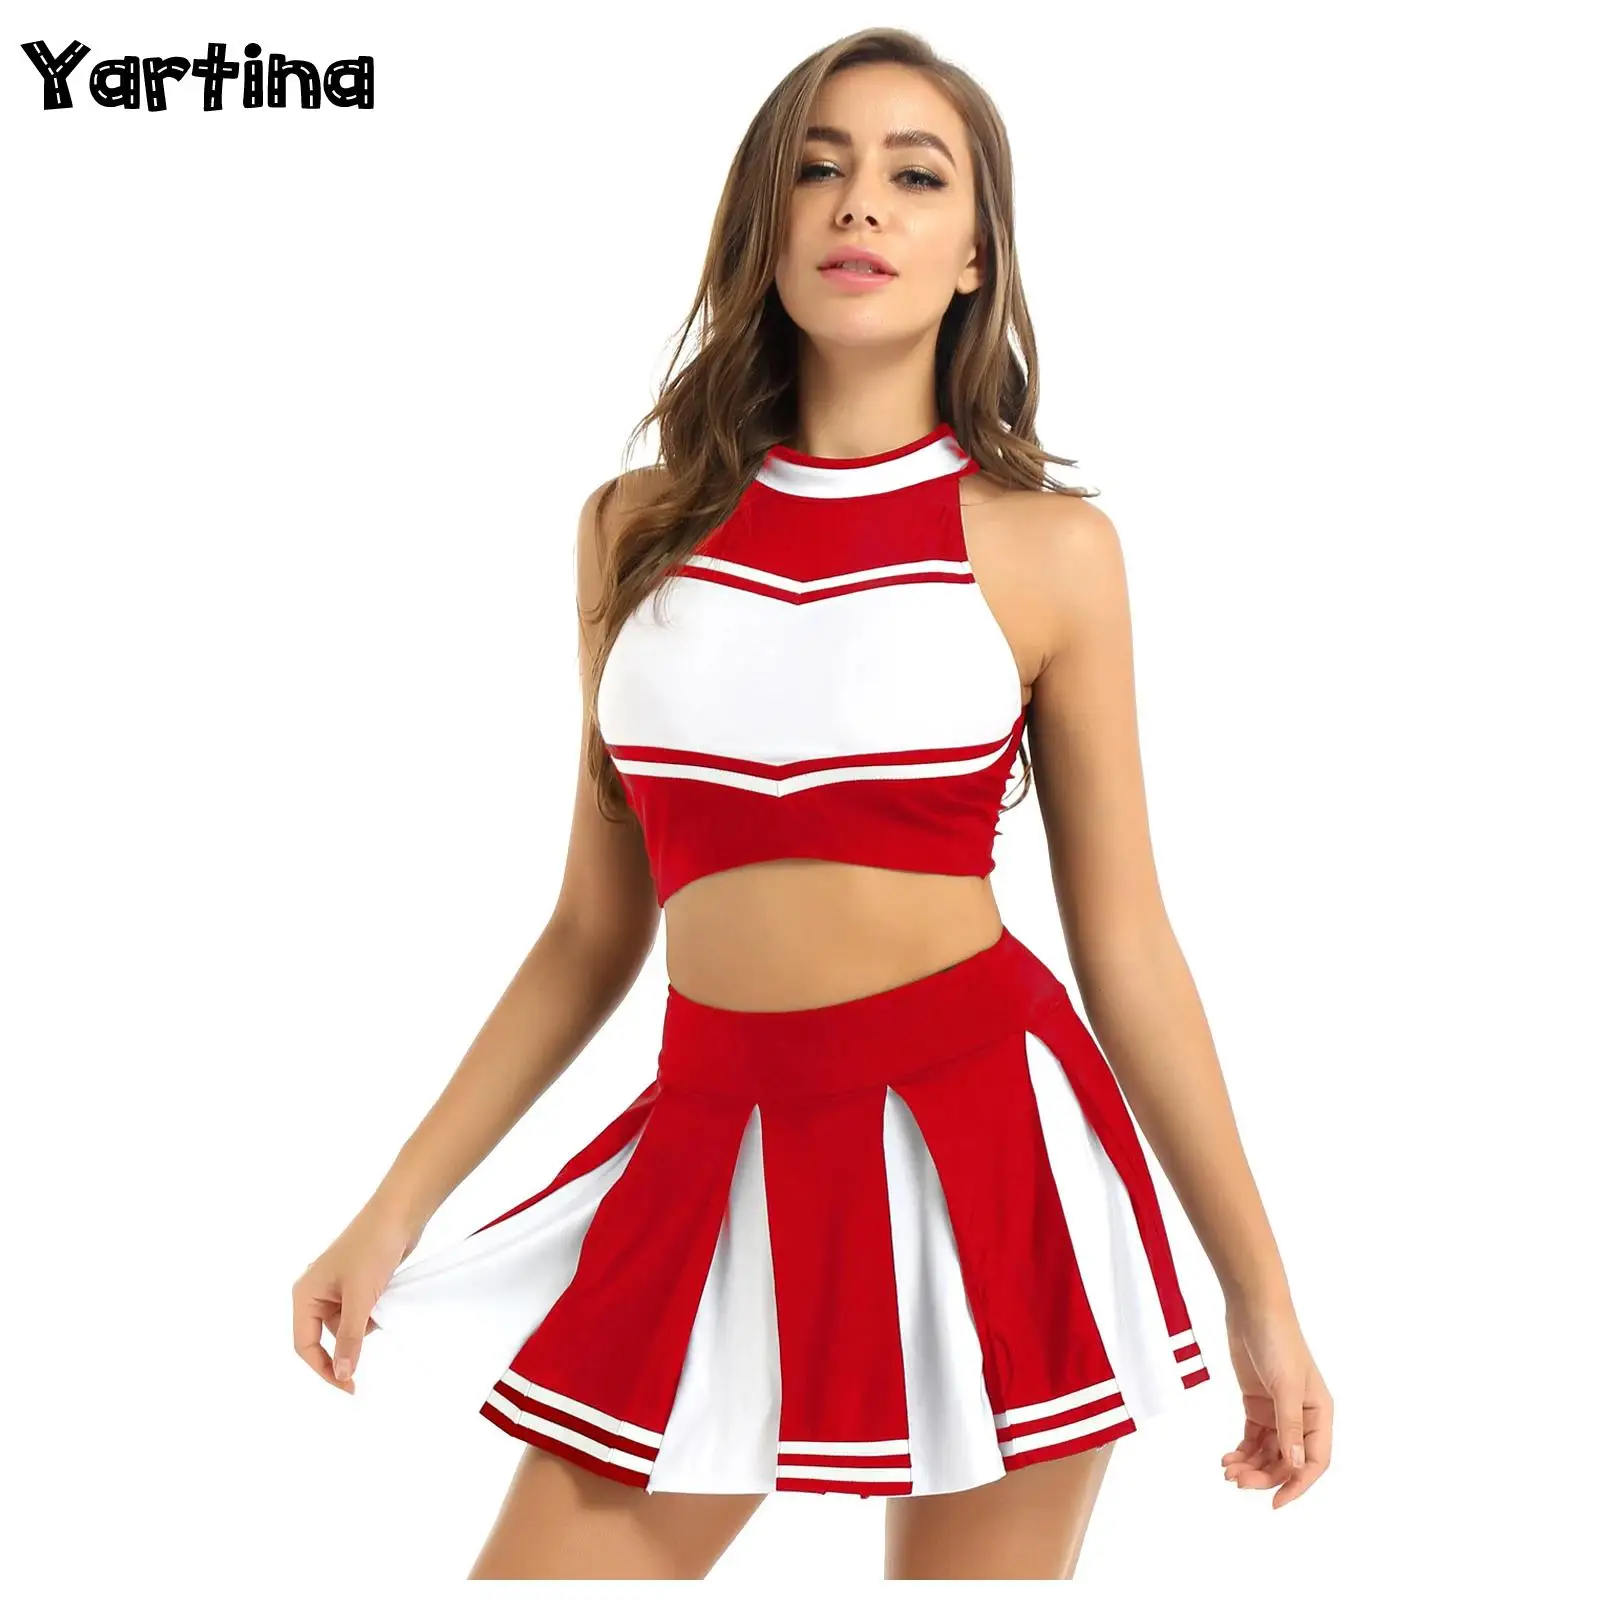 

2Pcs Womens School Girls Cosplay Outfit Cheerleading Carnival Dance Costume Cheerleader Uniform Crop Top with Mini Pleated Skirt